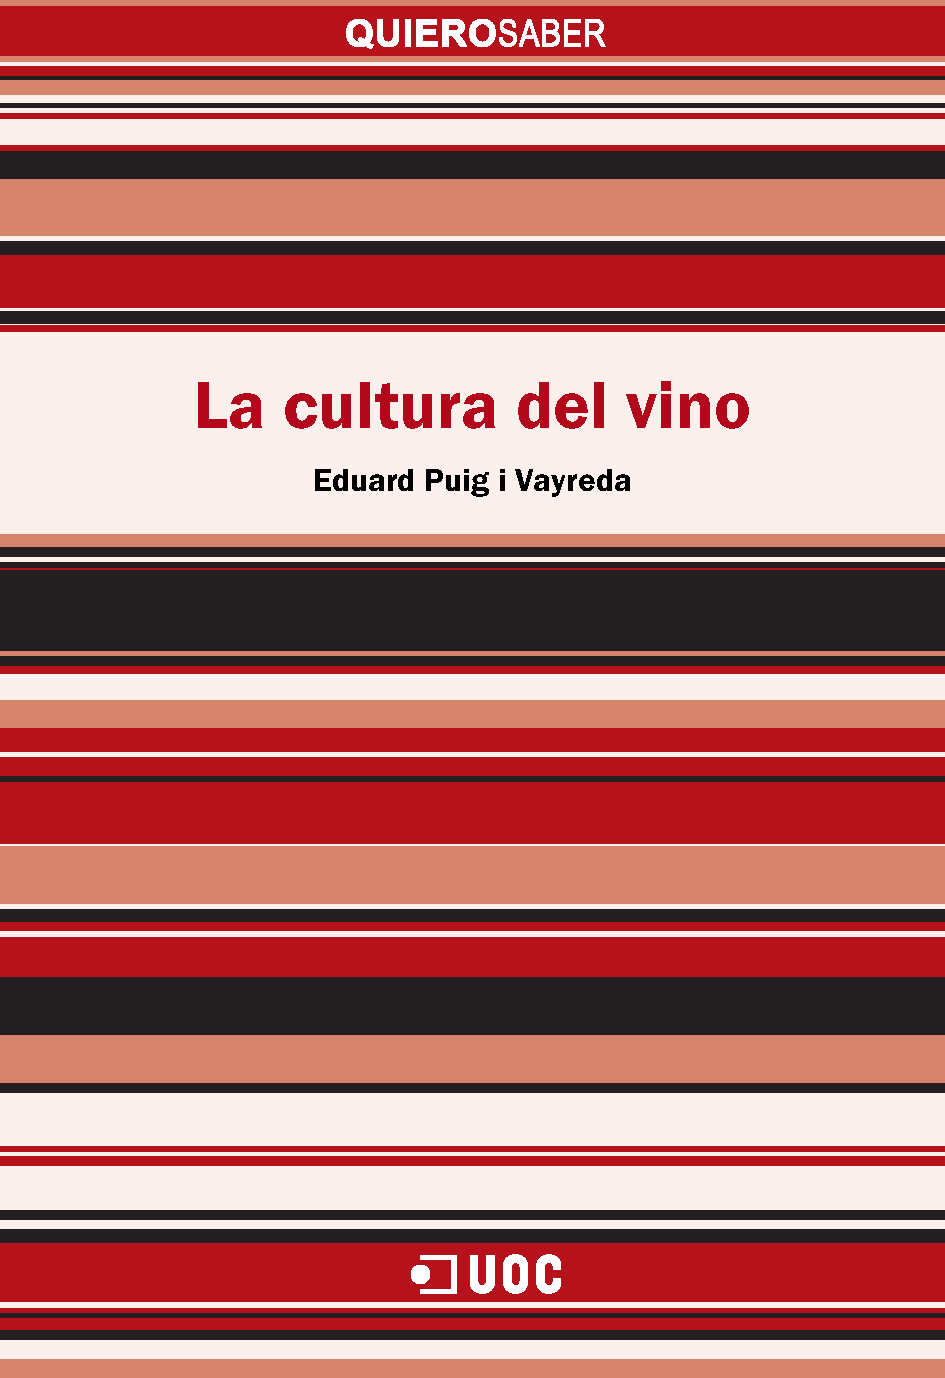 La cultura del vino